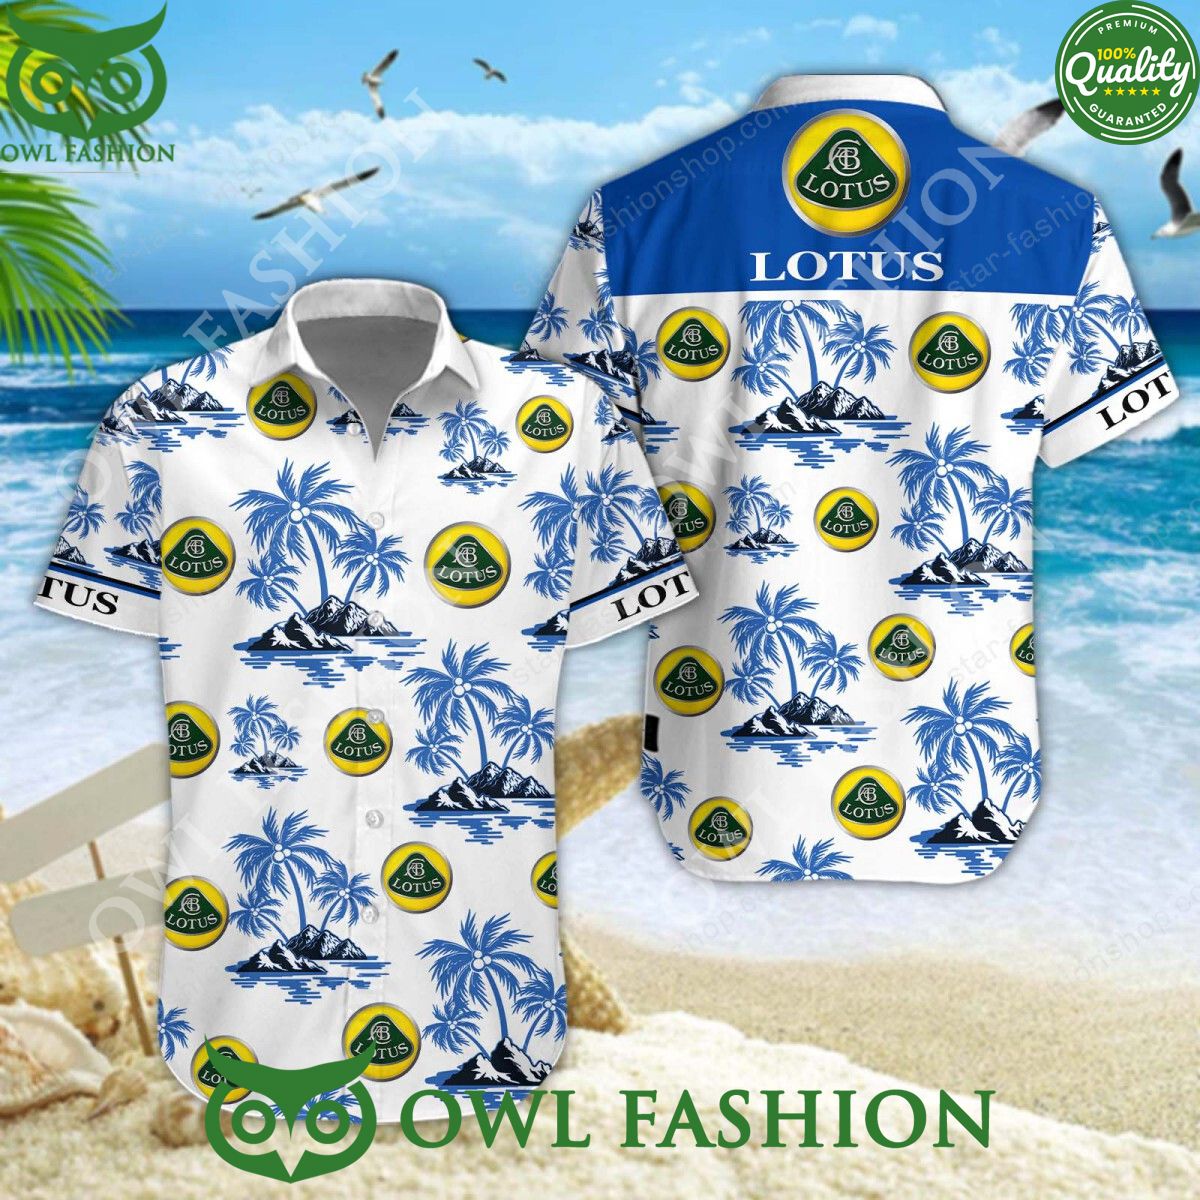 Lotus Luxury Car Manufacturer Limited Hawaiian Shirt Shorts